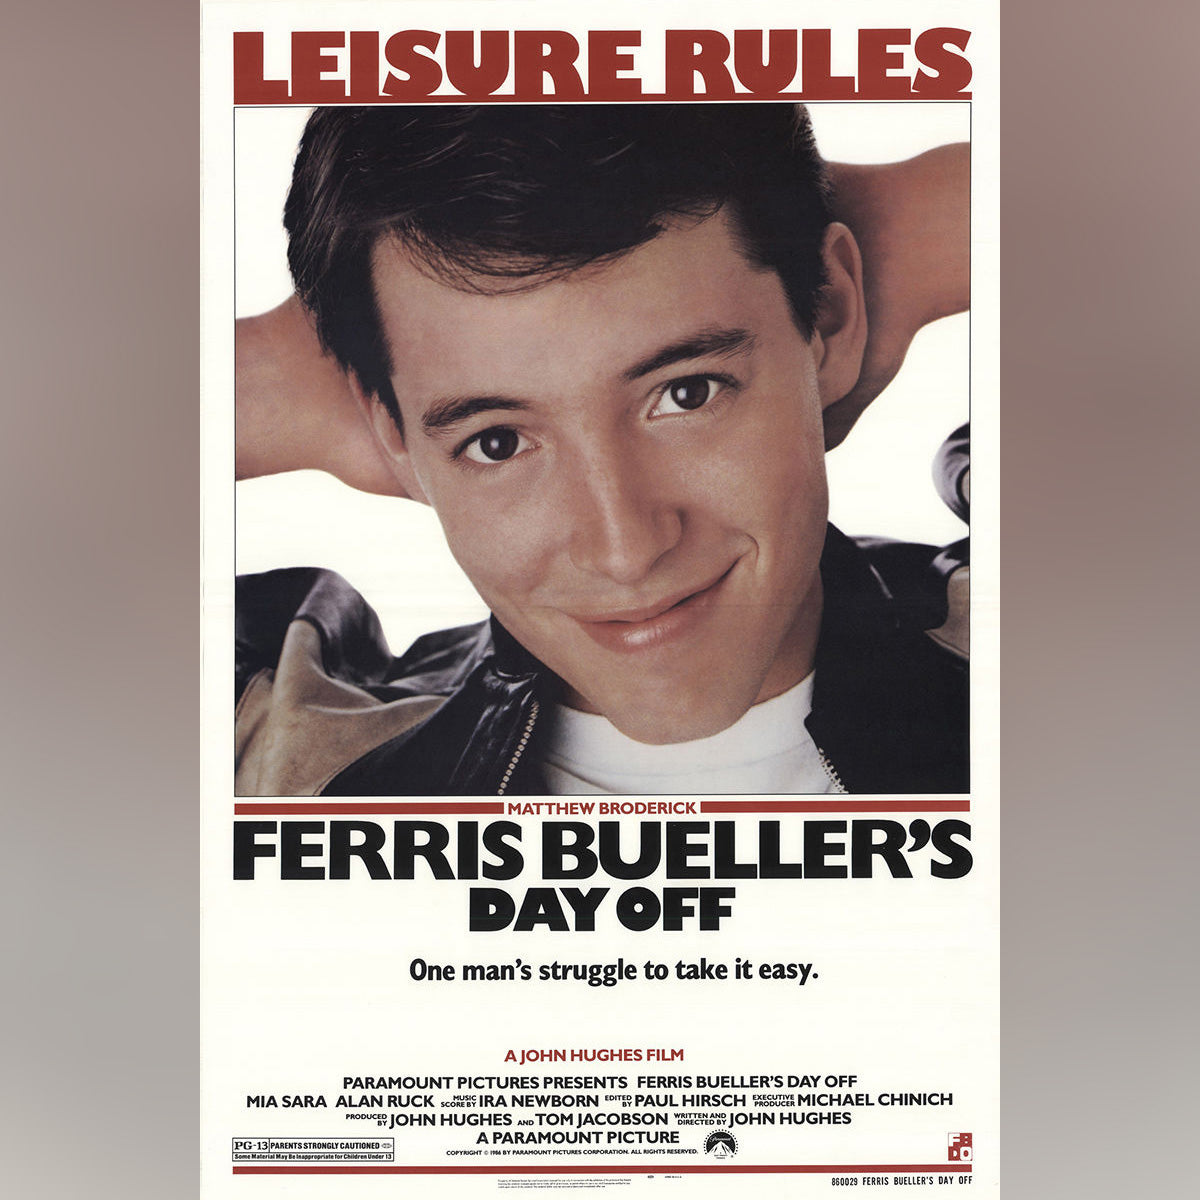 Original Movie Poster of Ferris Bueller's Day Off (1986)